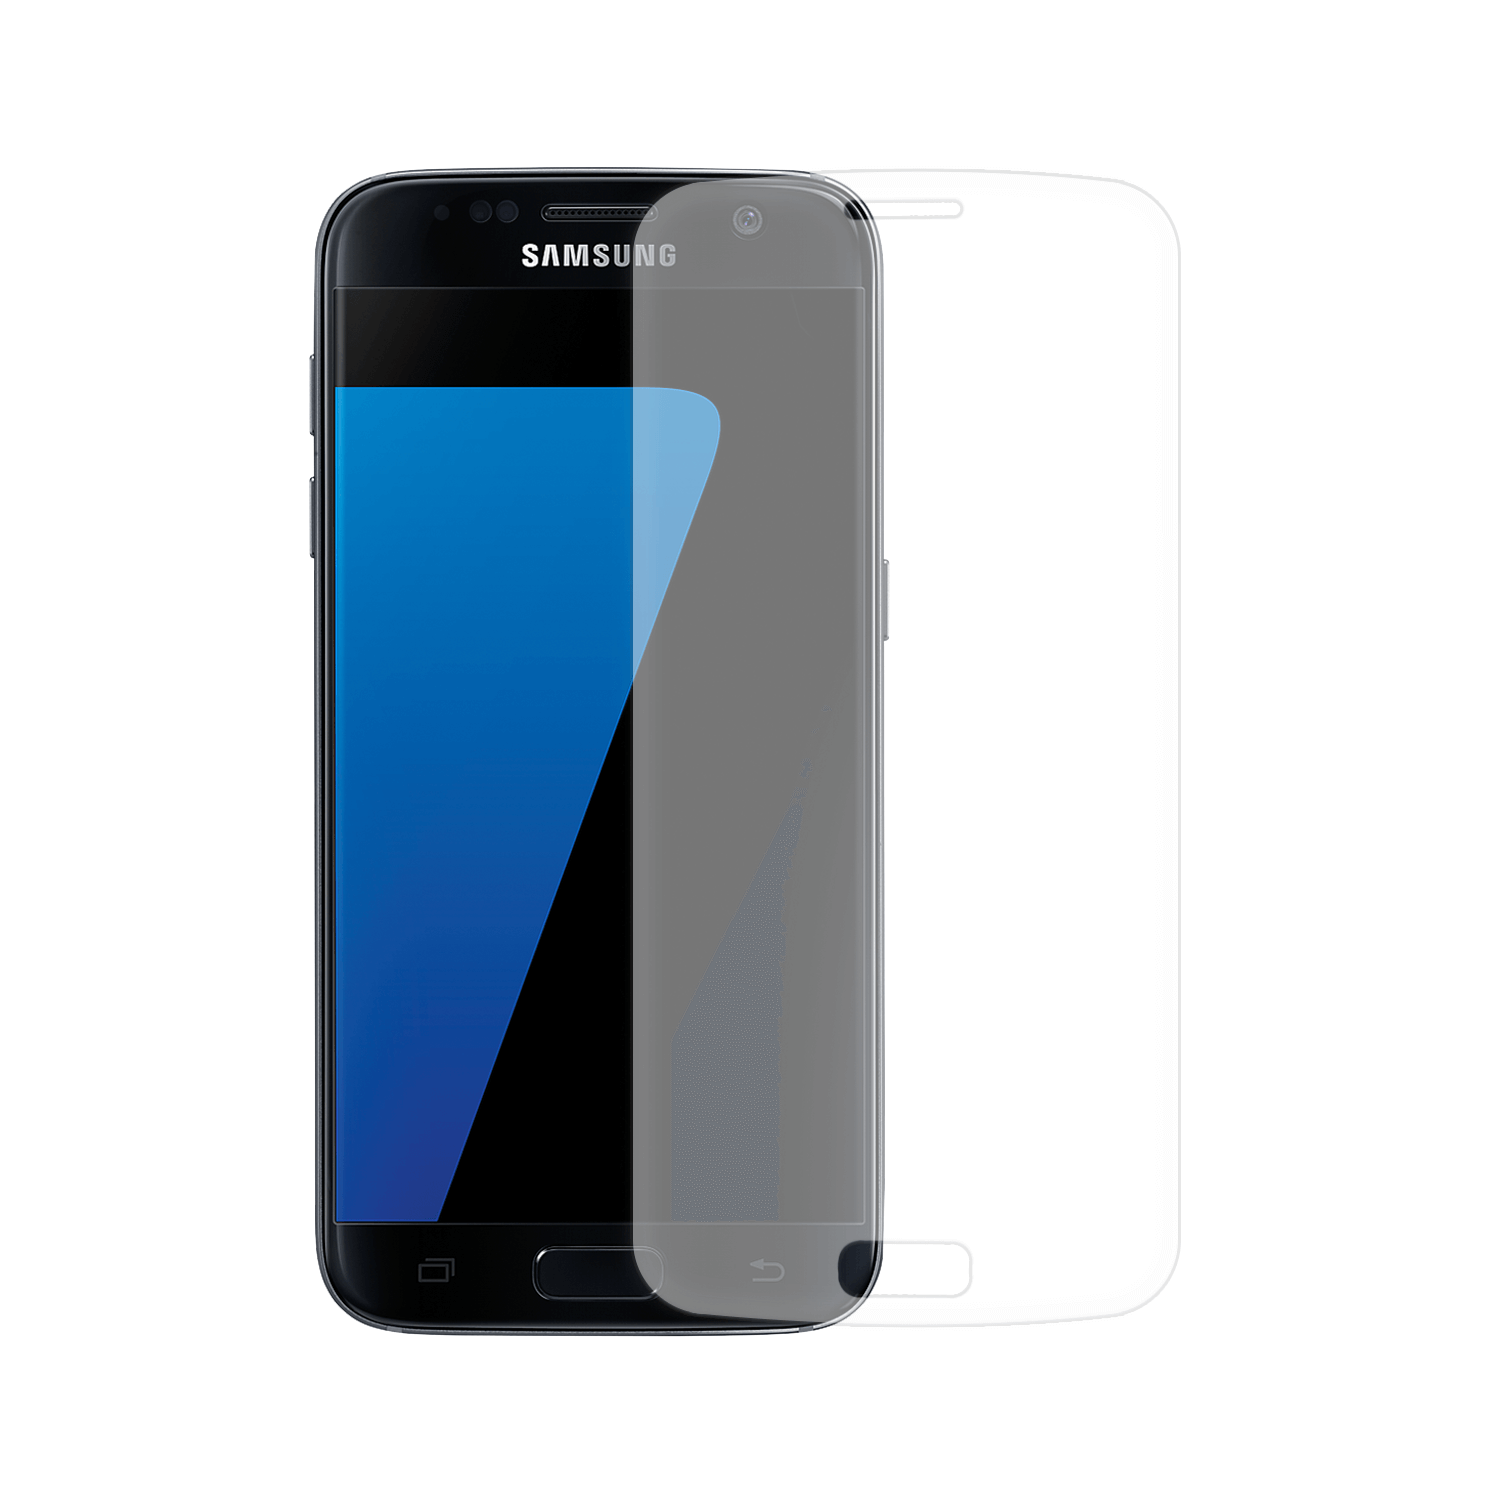 Samsung Kies S7 Edge